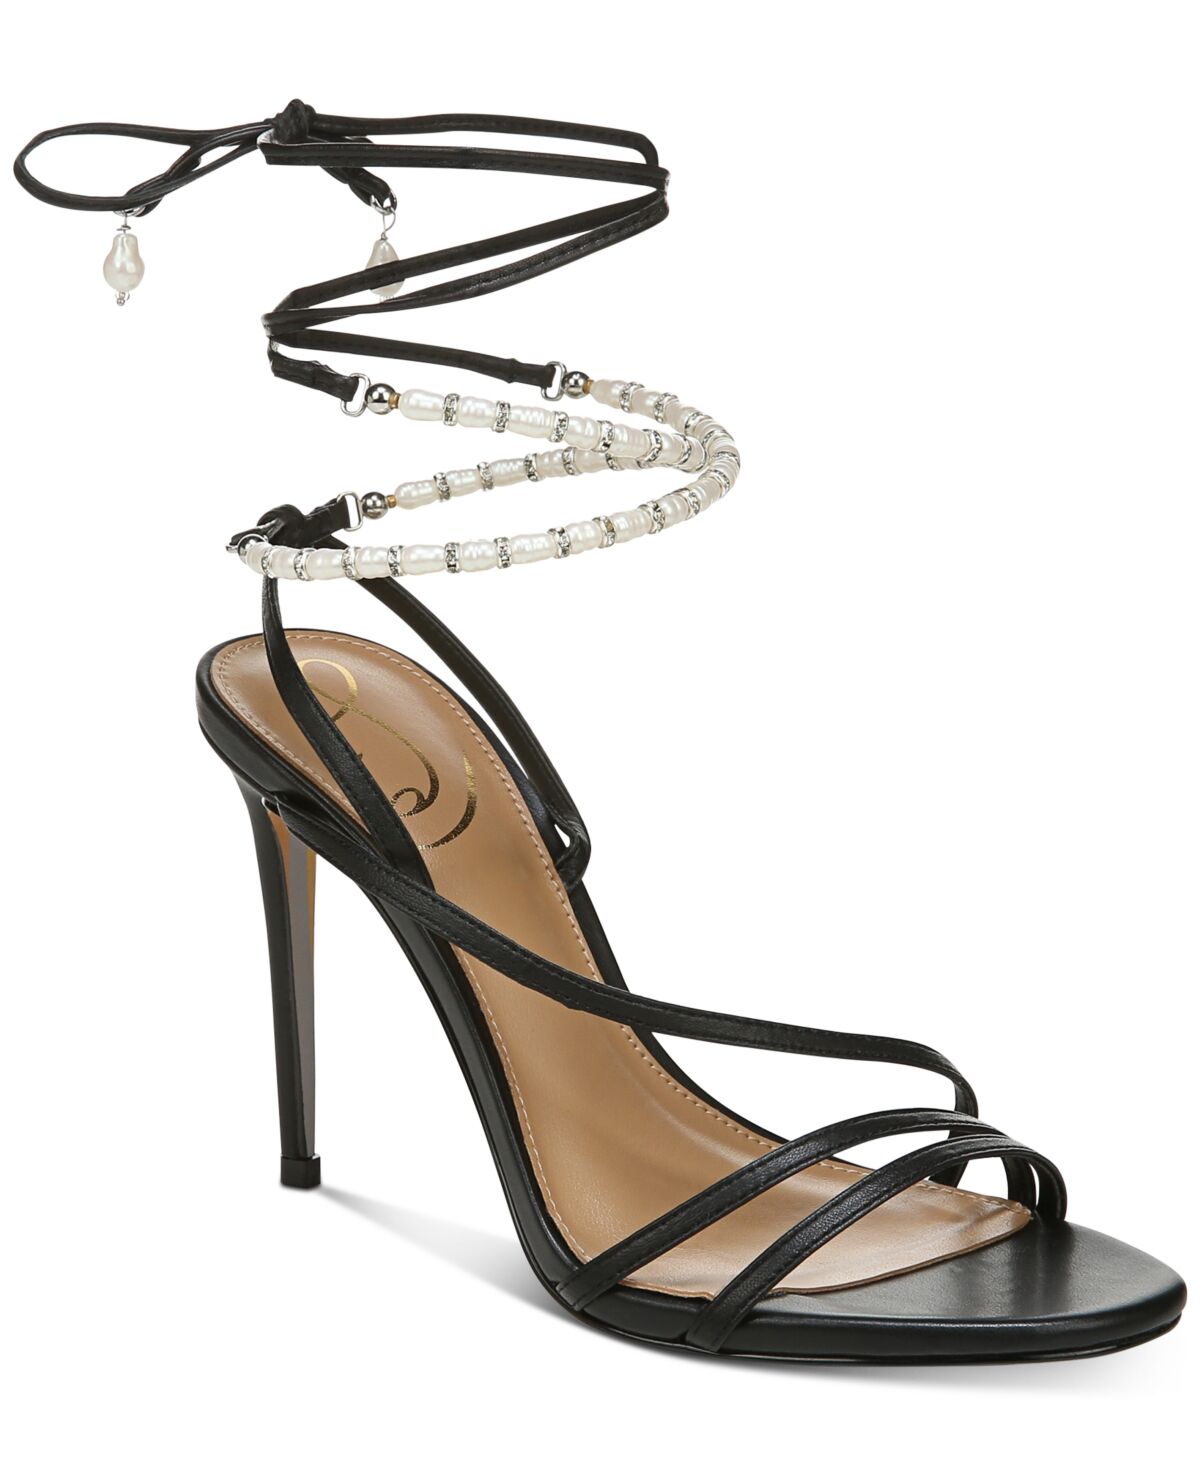 Sam Edelman Women's Scarlette Ankle Strap Dress Sandals - Black